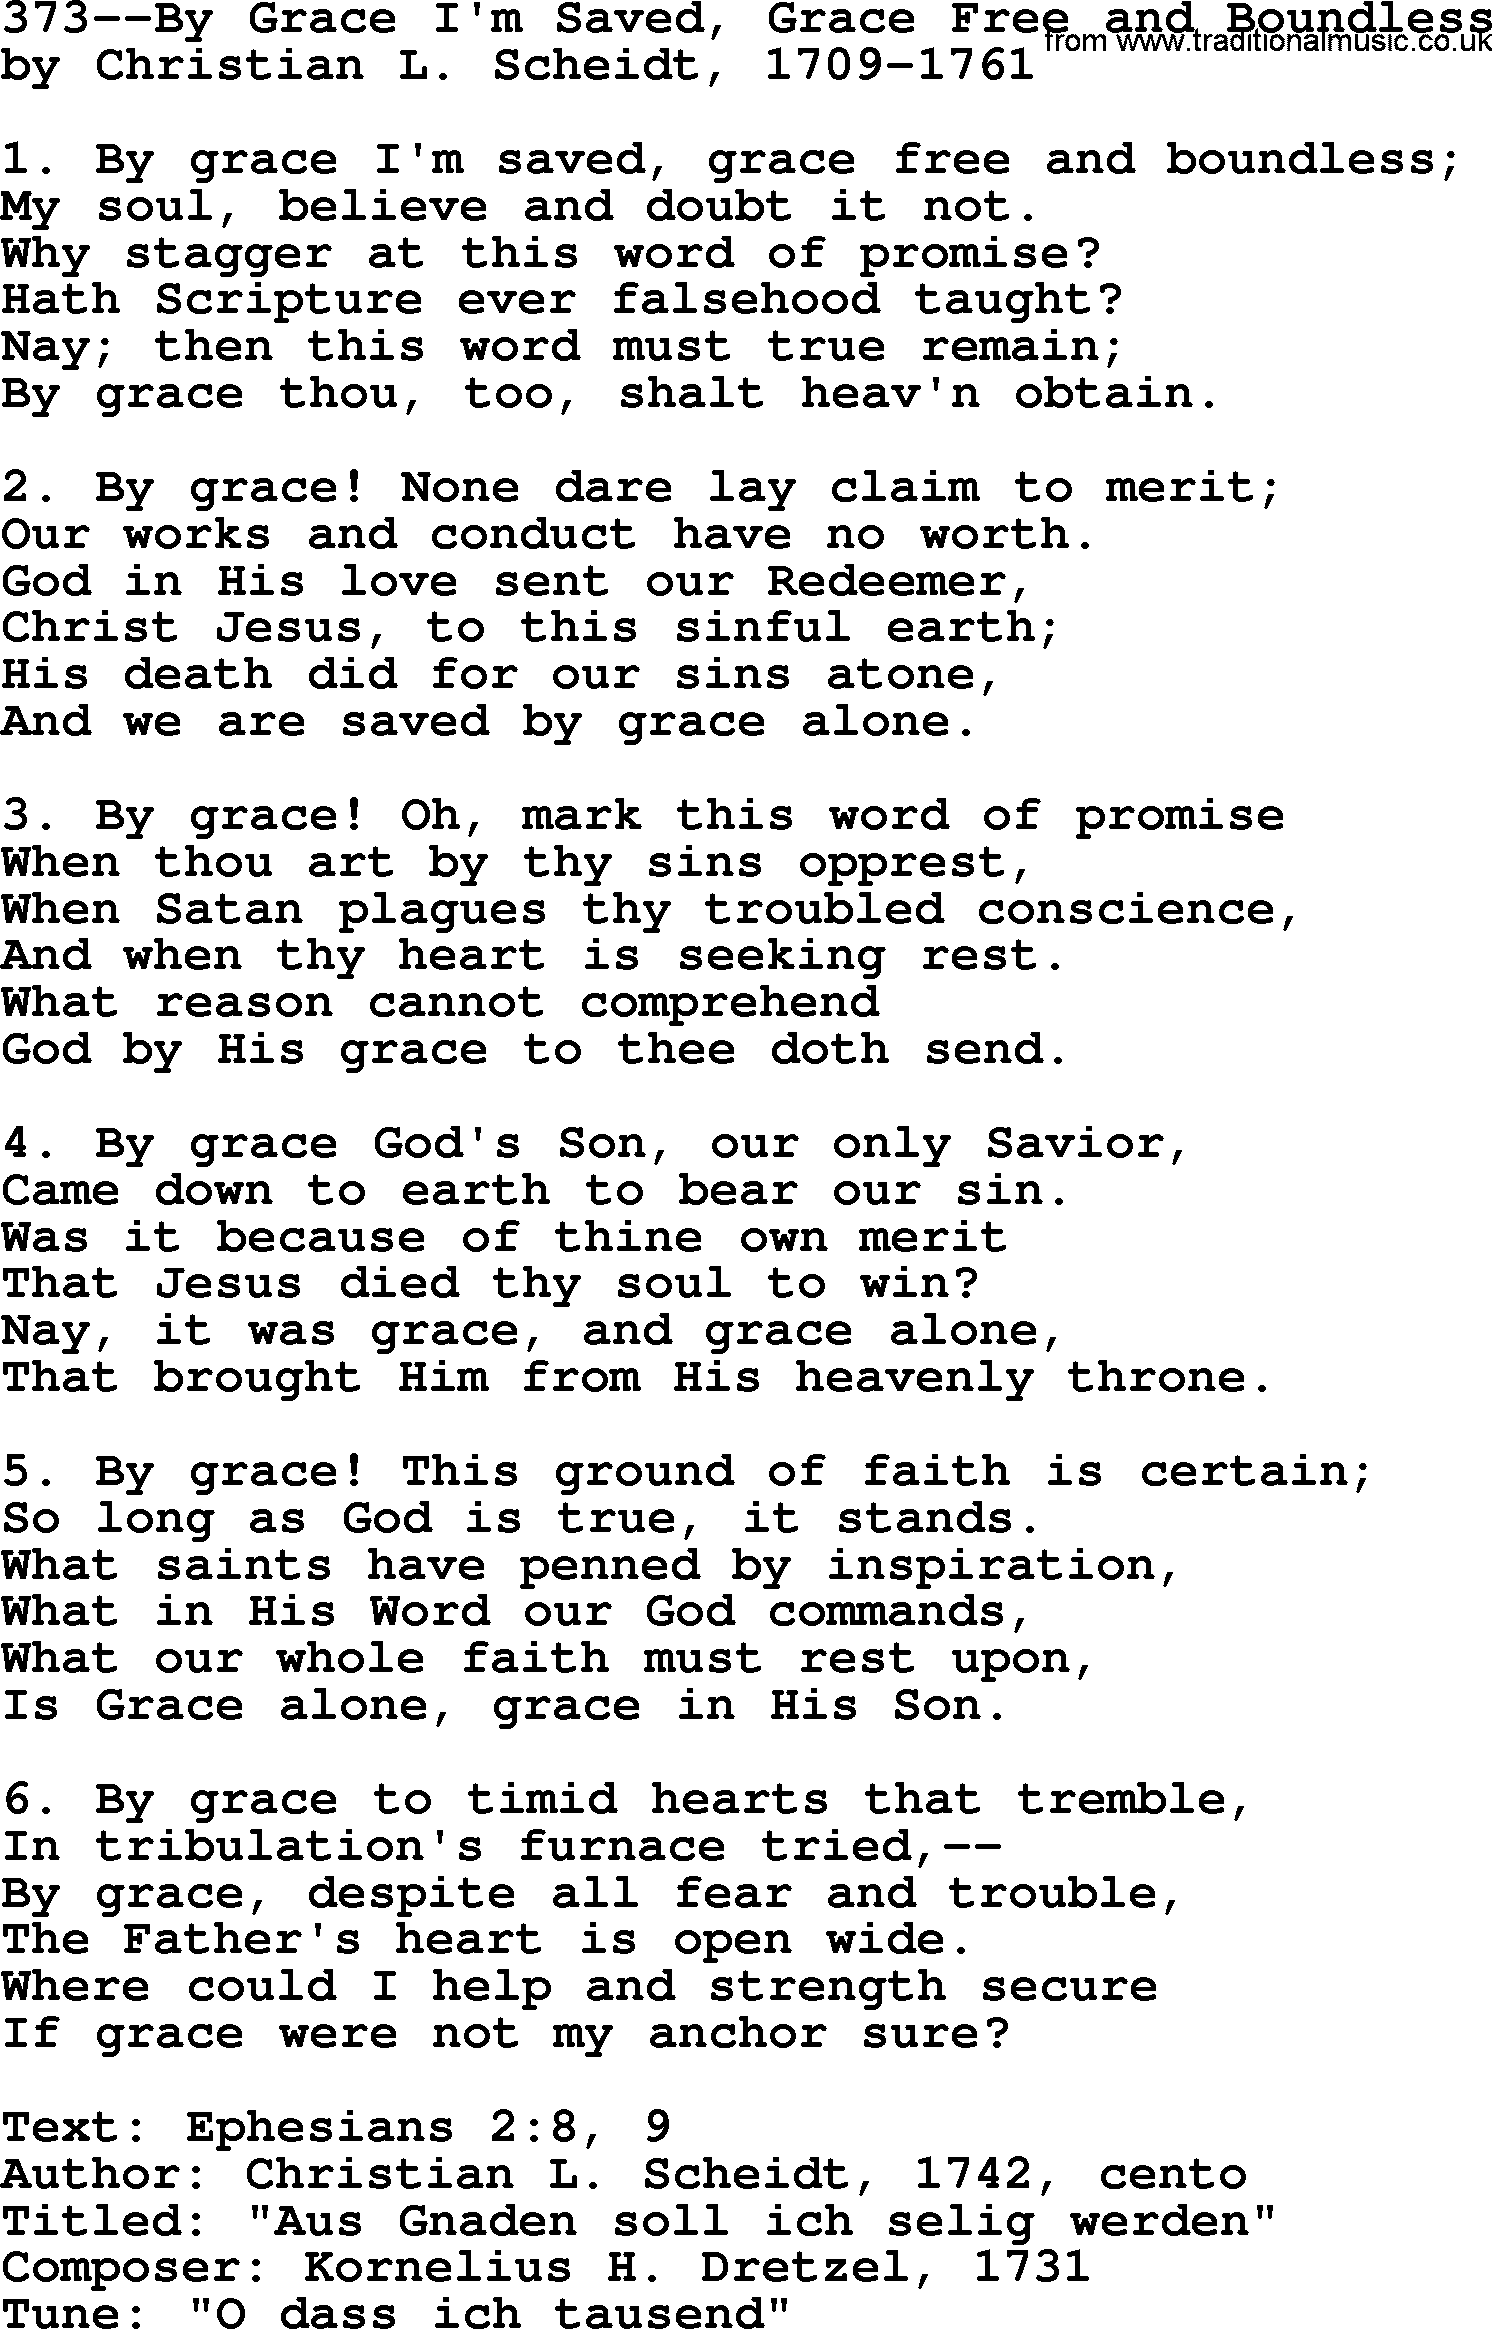 Lutheran Hymn: 373--By Grace I'm Saved, Grace Free and Boundless.txt lyrics with PDF